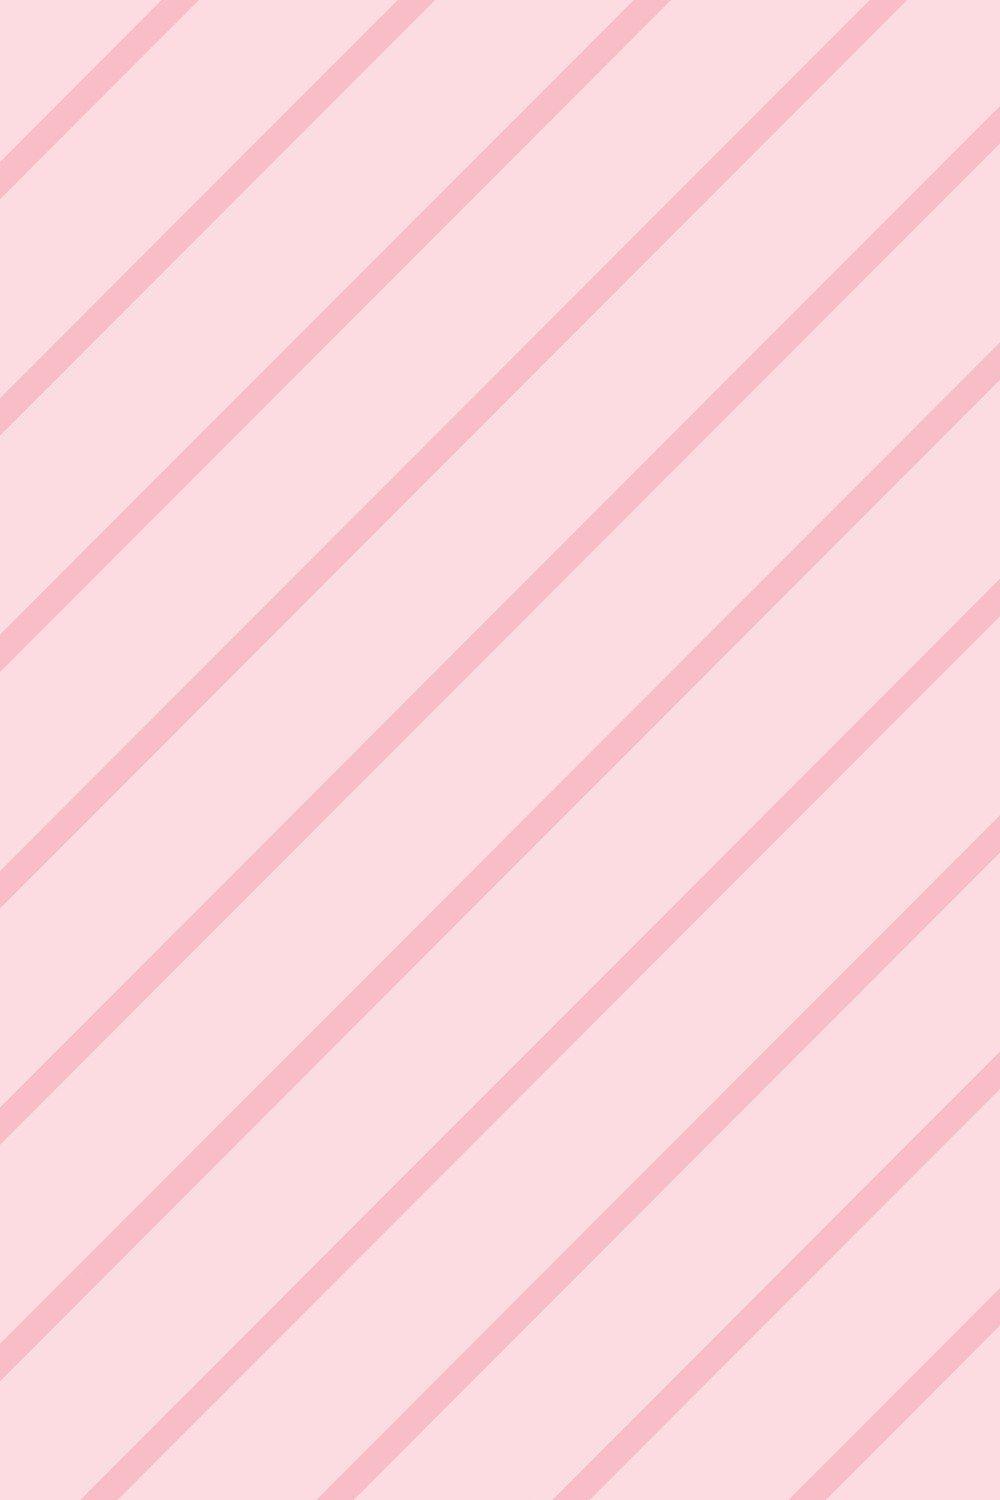 Eco-Friendly Diagonal Ice Cream Pinstripe Pastel Wallpaper